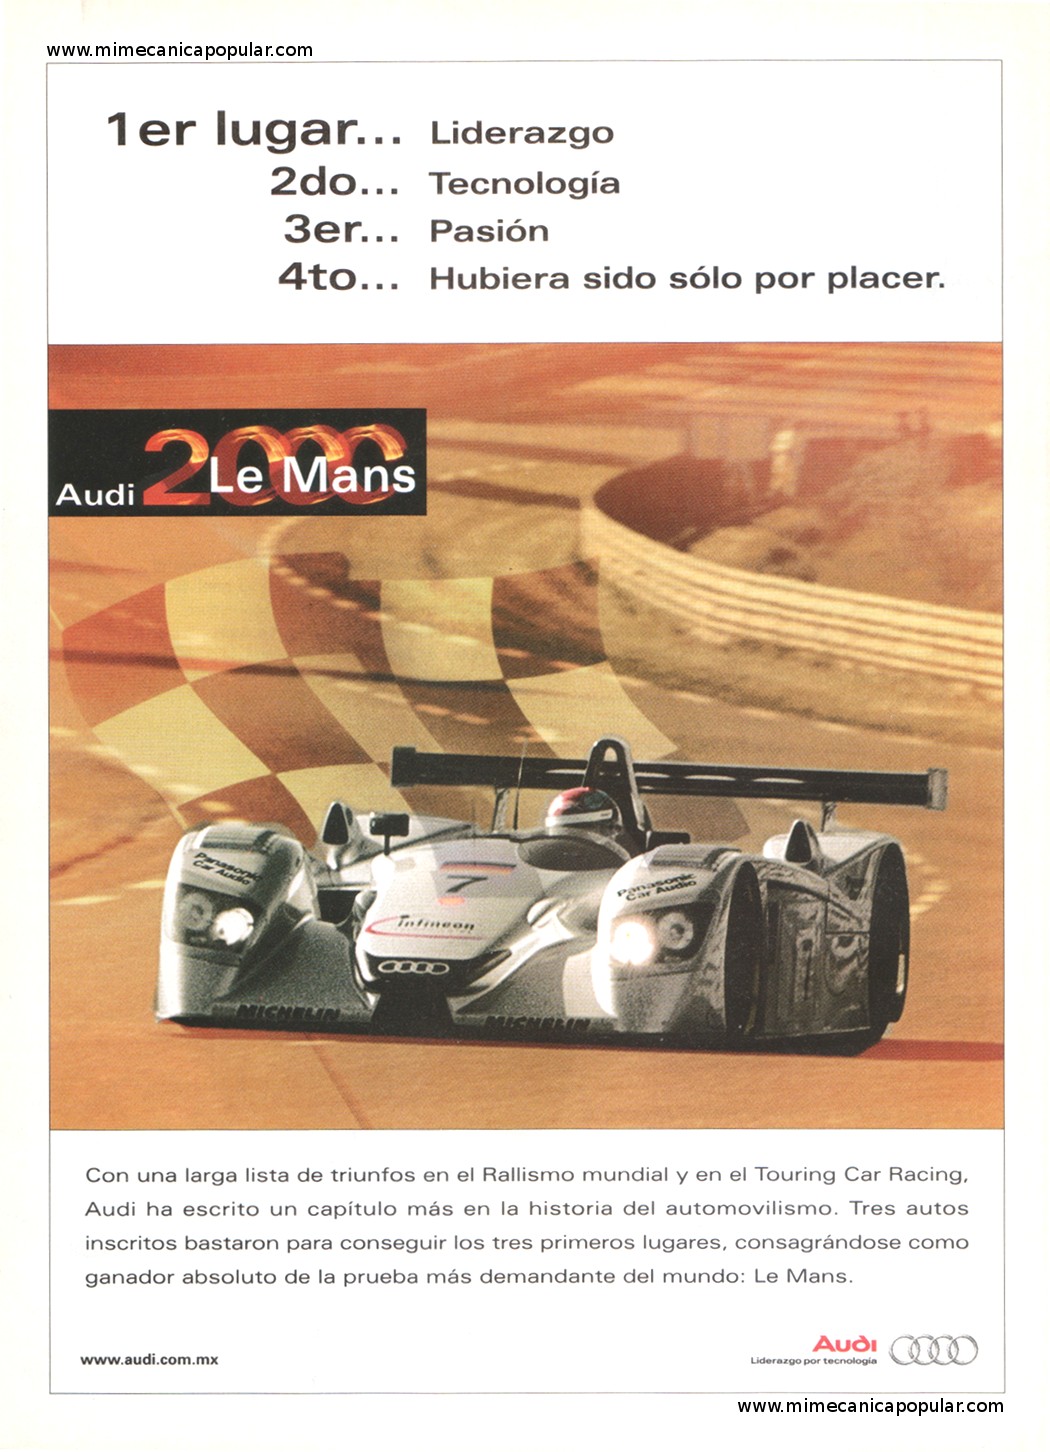 Publicidad - Audi 2000 Le Mans - Diciembre 2000